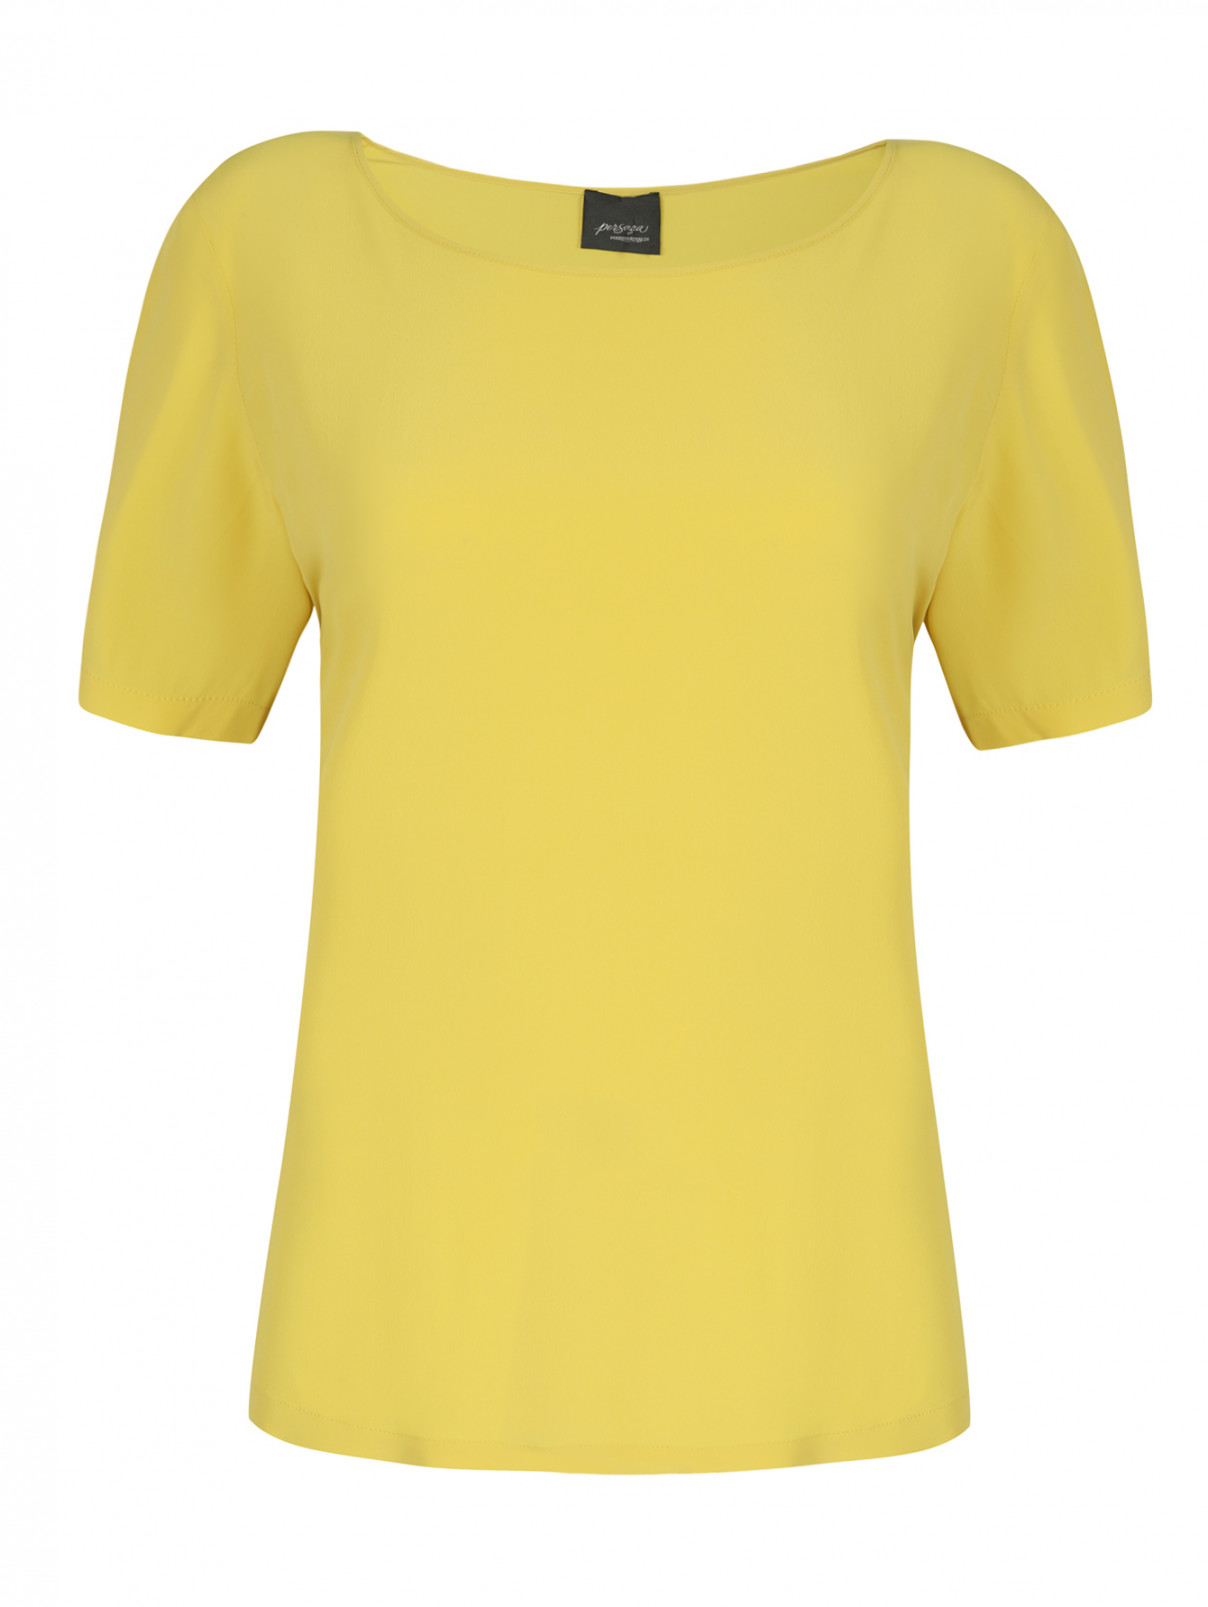 Блуза из смесового шелка с коротким рукавом Persona by Marina Rinaldi  –  Общий вид  – Цвет:  Желтый